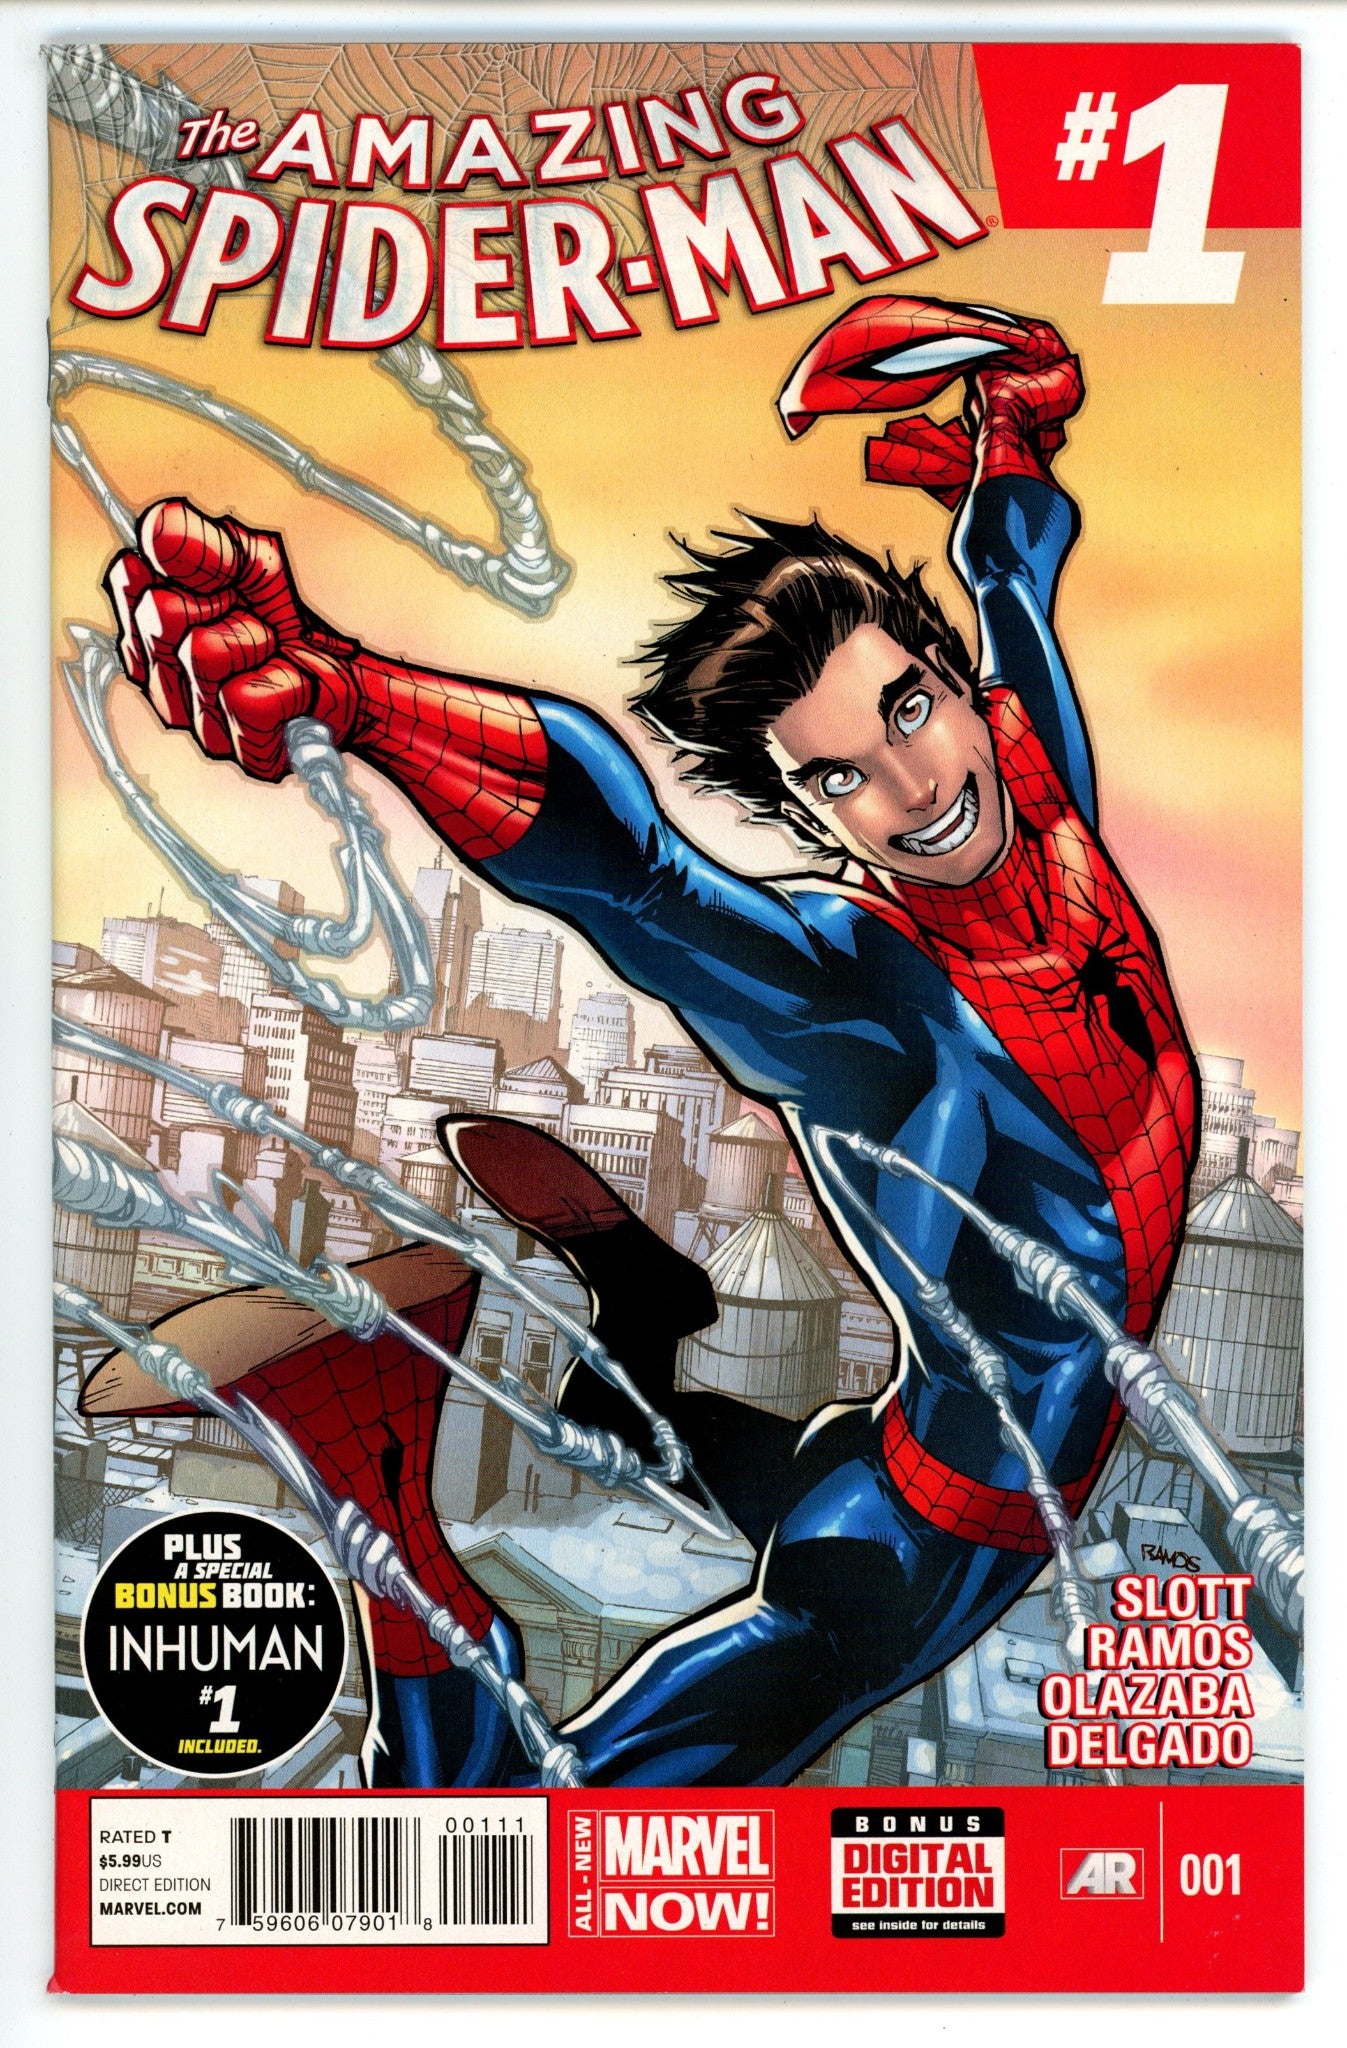 The Amazing Spider-Man Vol 3 1 NM- (9.2) (2014) 